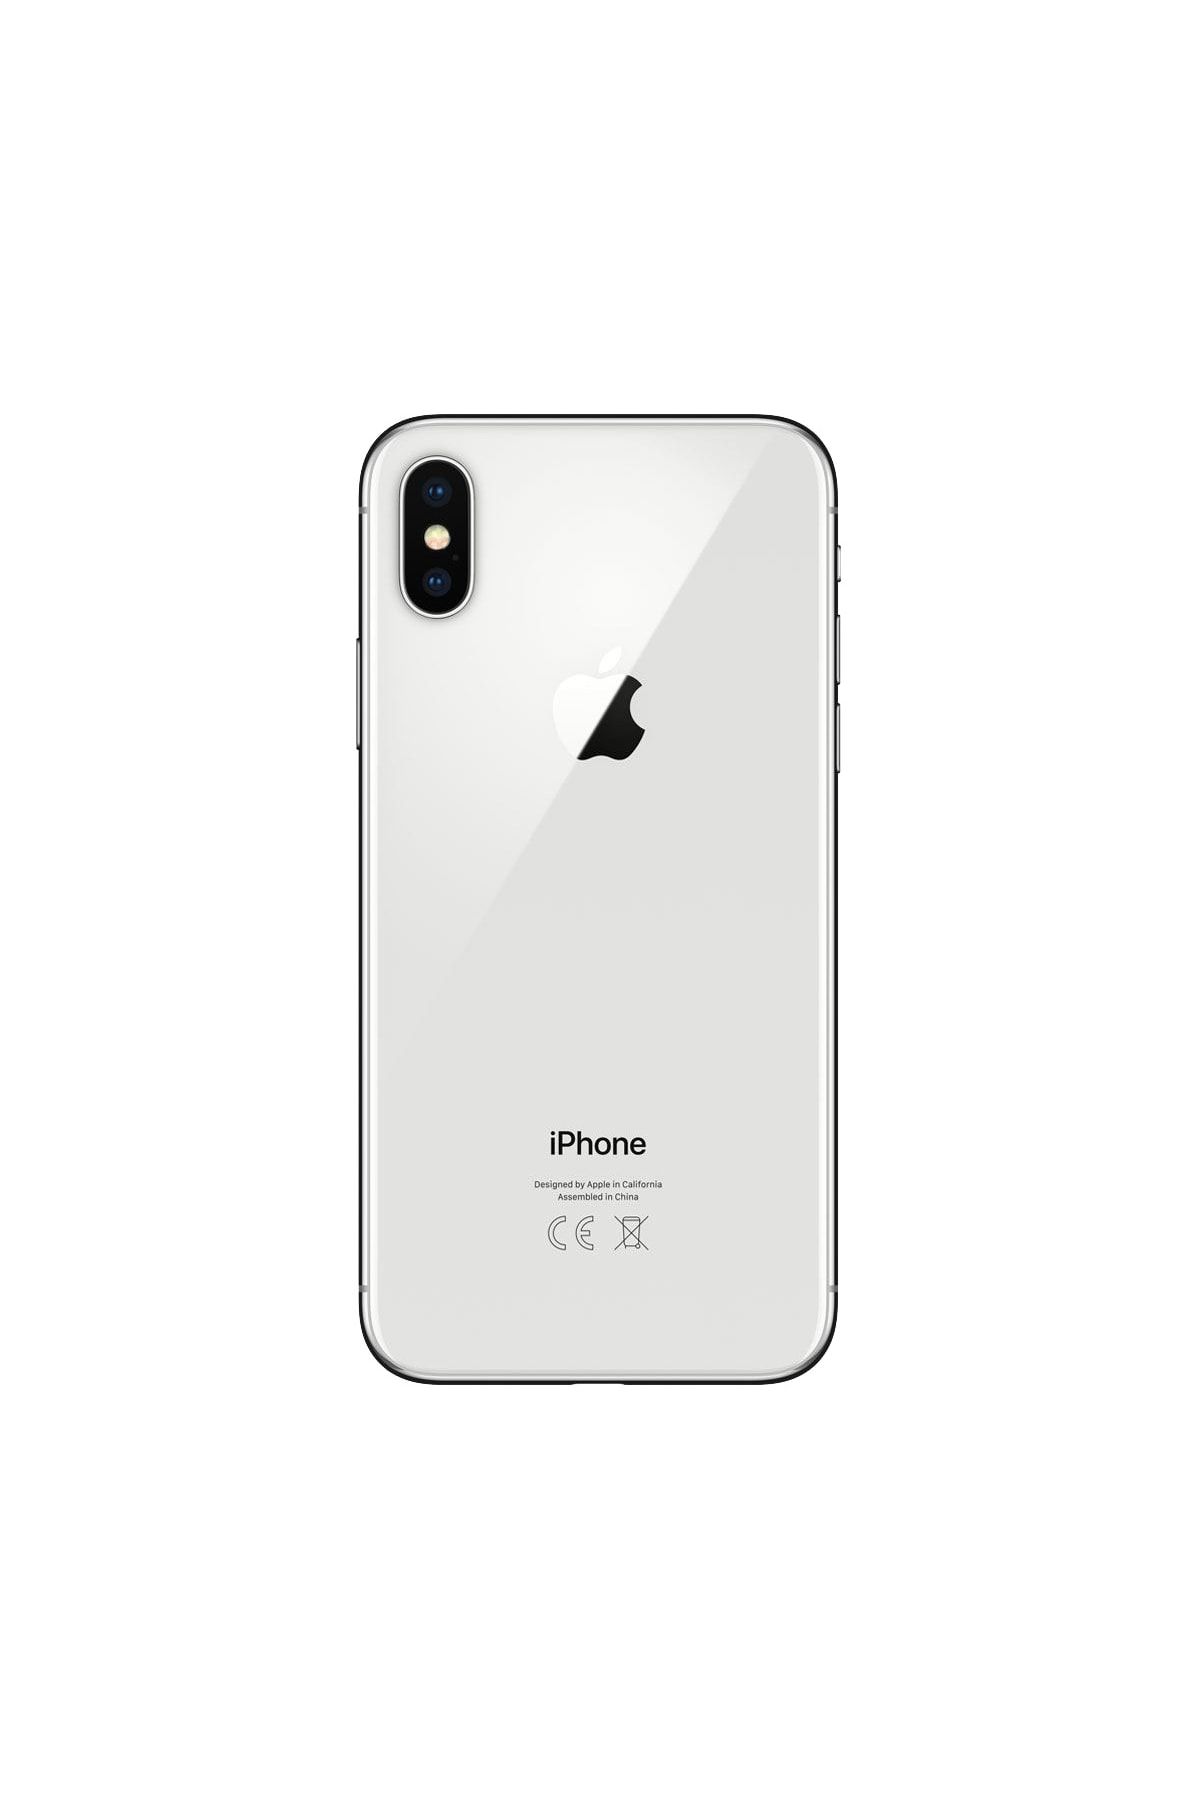 Apple Yenilenmiş iPhone X 64 GB Gümüş Cep Telefonu (12 Ay Garantili) - A Kalite